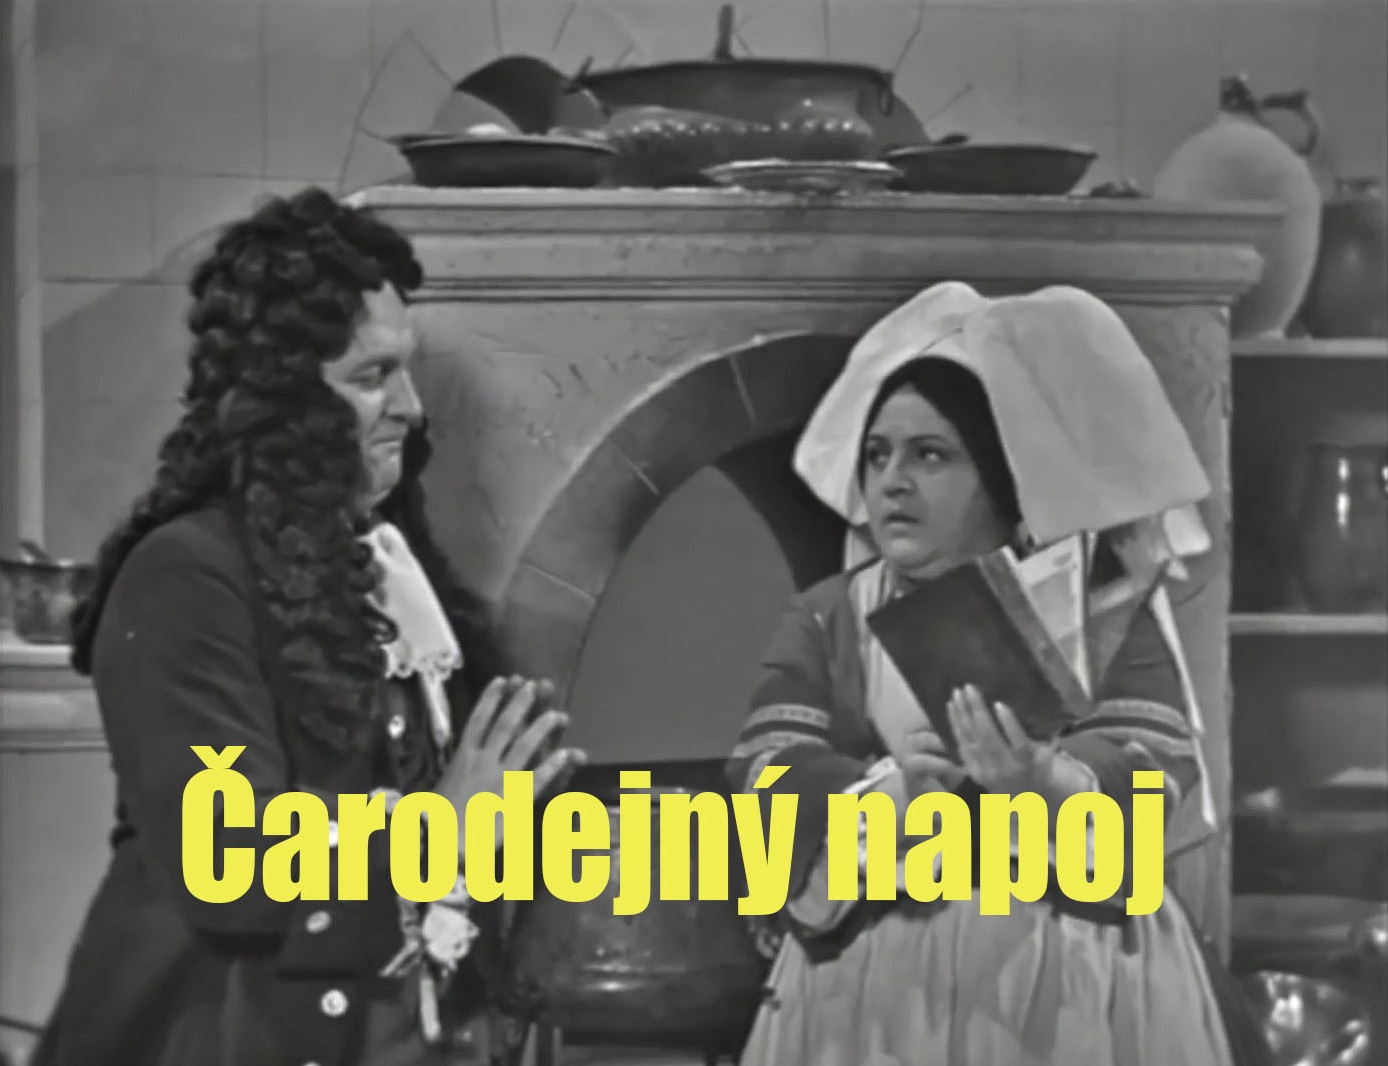 Stiahni si Filmy CZ/SK dabing Carodejny napoj (1971)(SK)[TvRip] = CSFD 51%